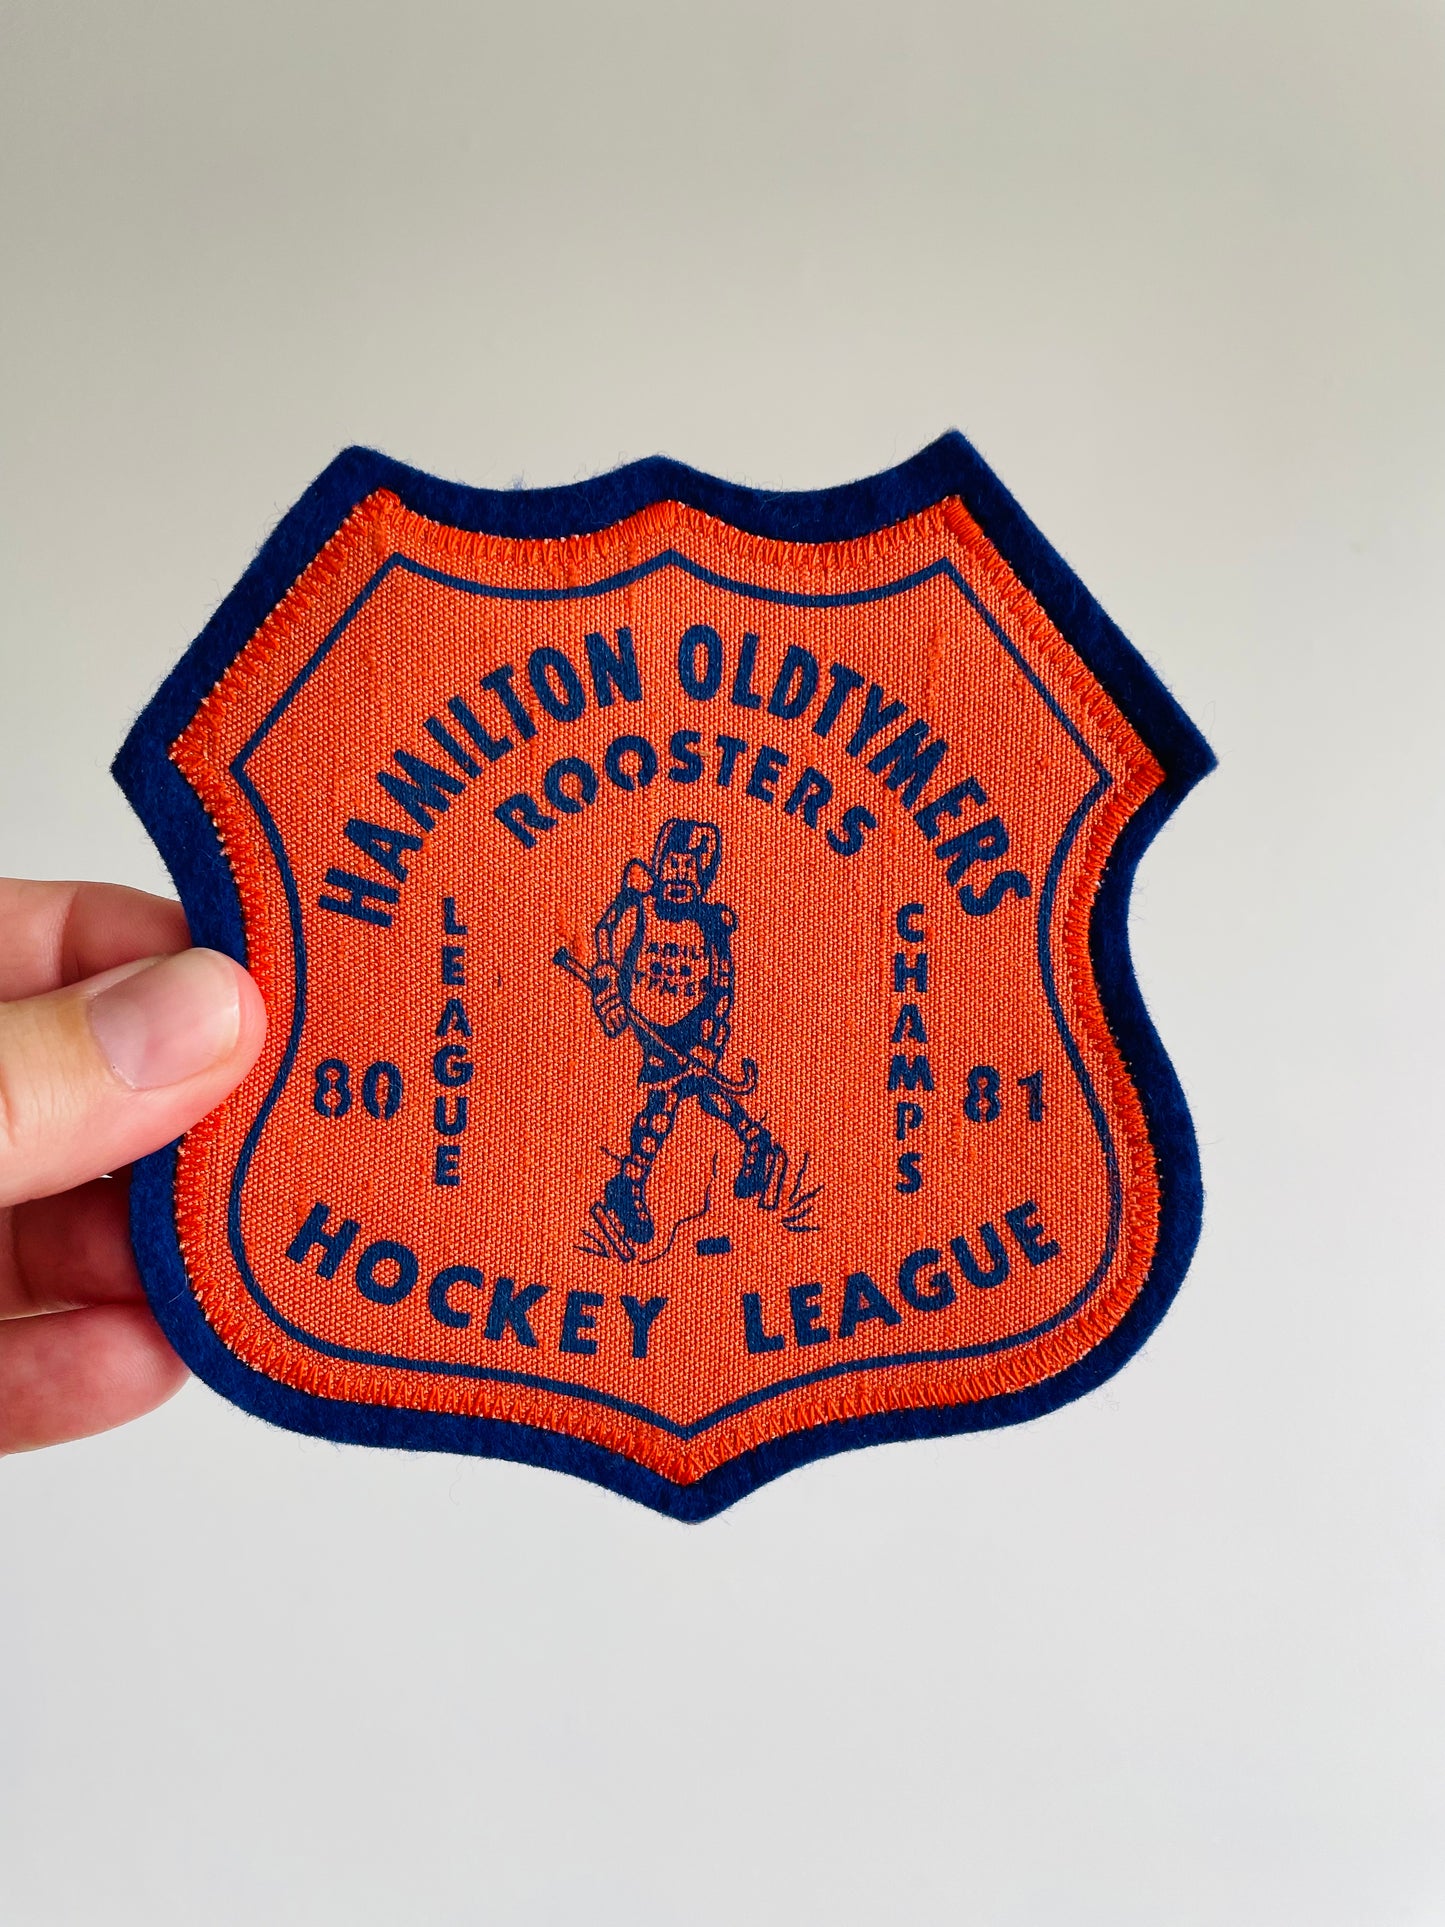 Vintage Felt Hockey Patch - 1980 / 1981 Roosters League Champs Hamilton Oldtymers Hockey League